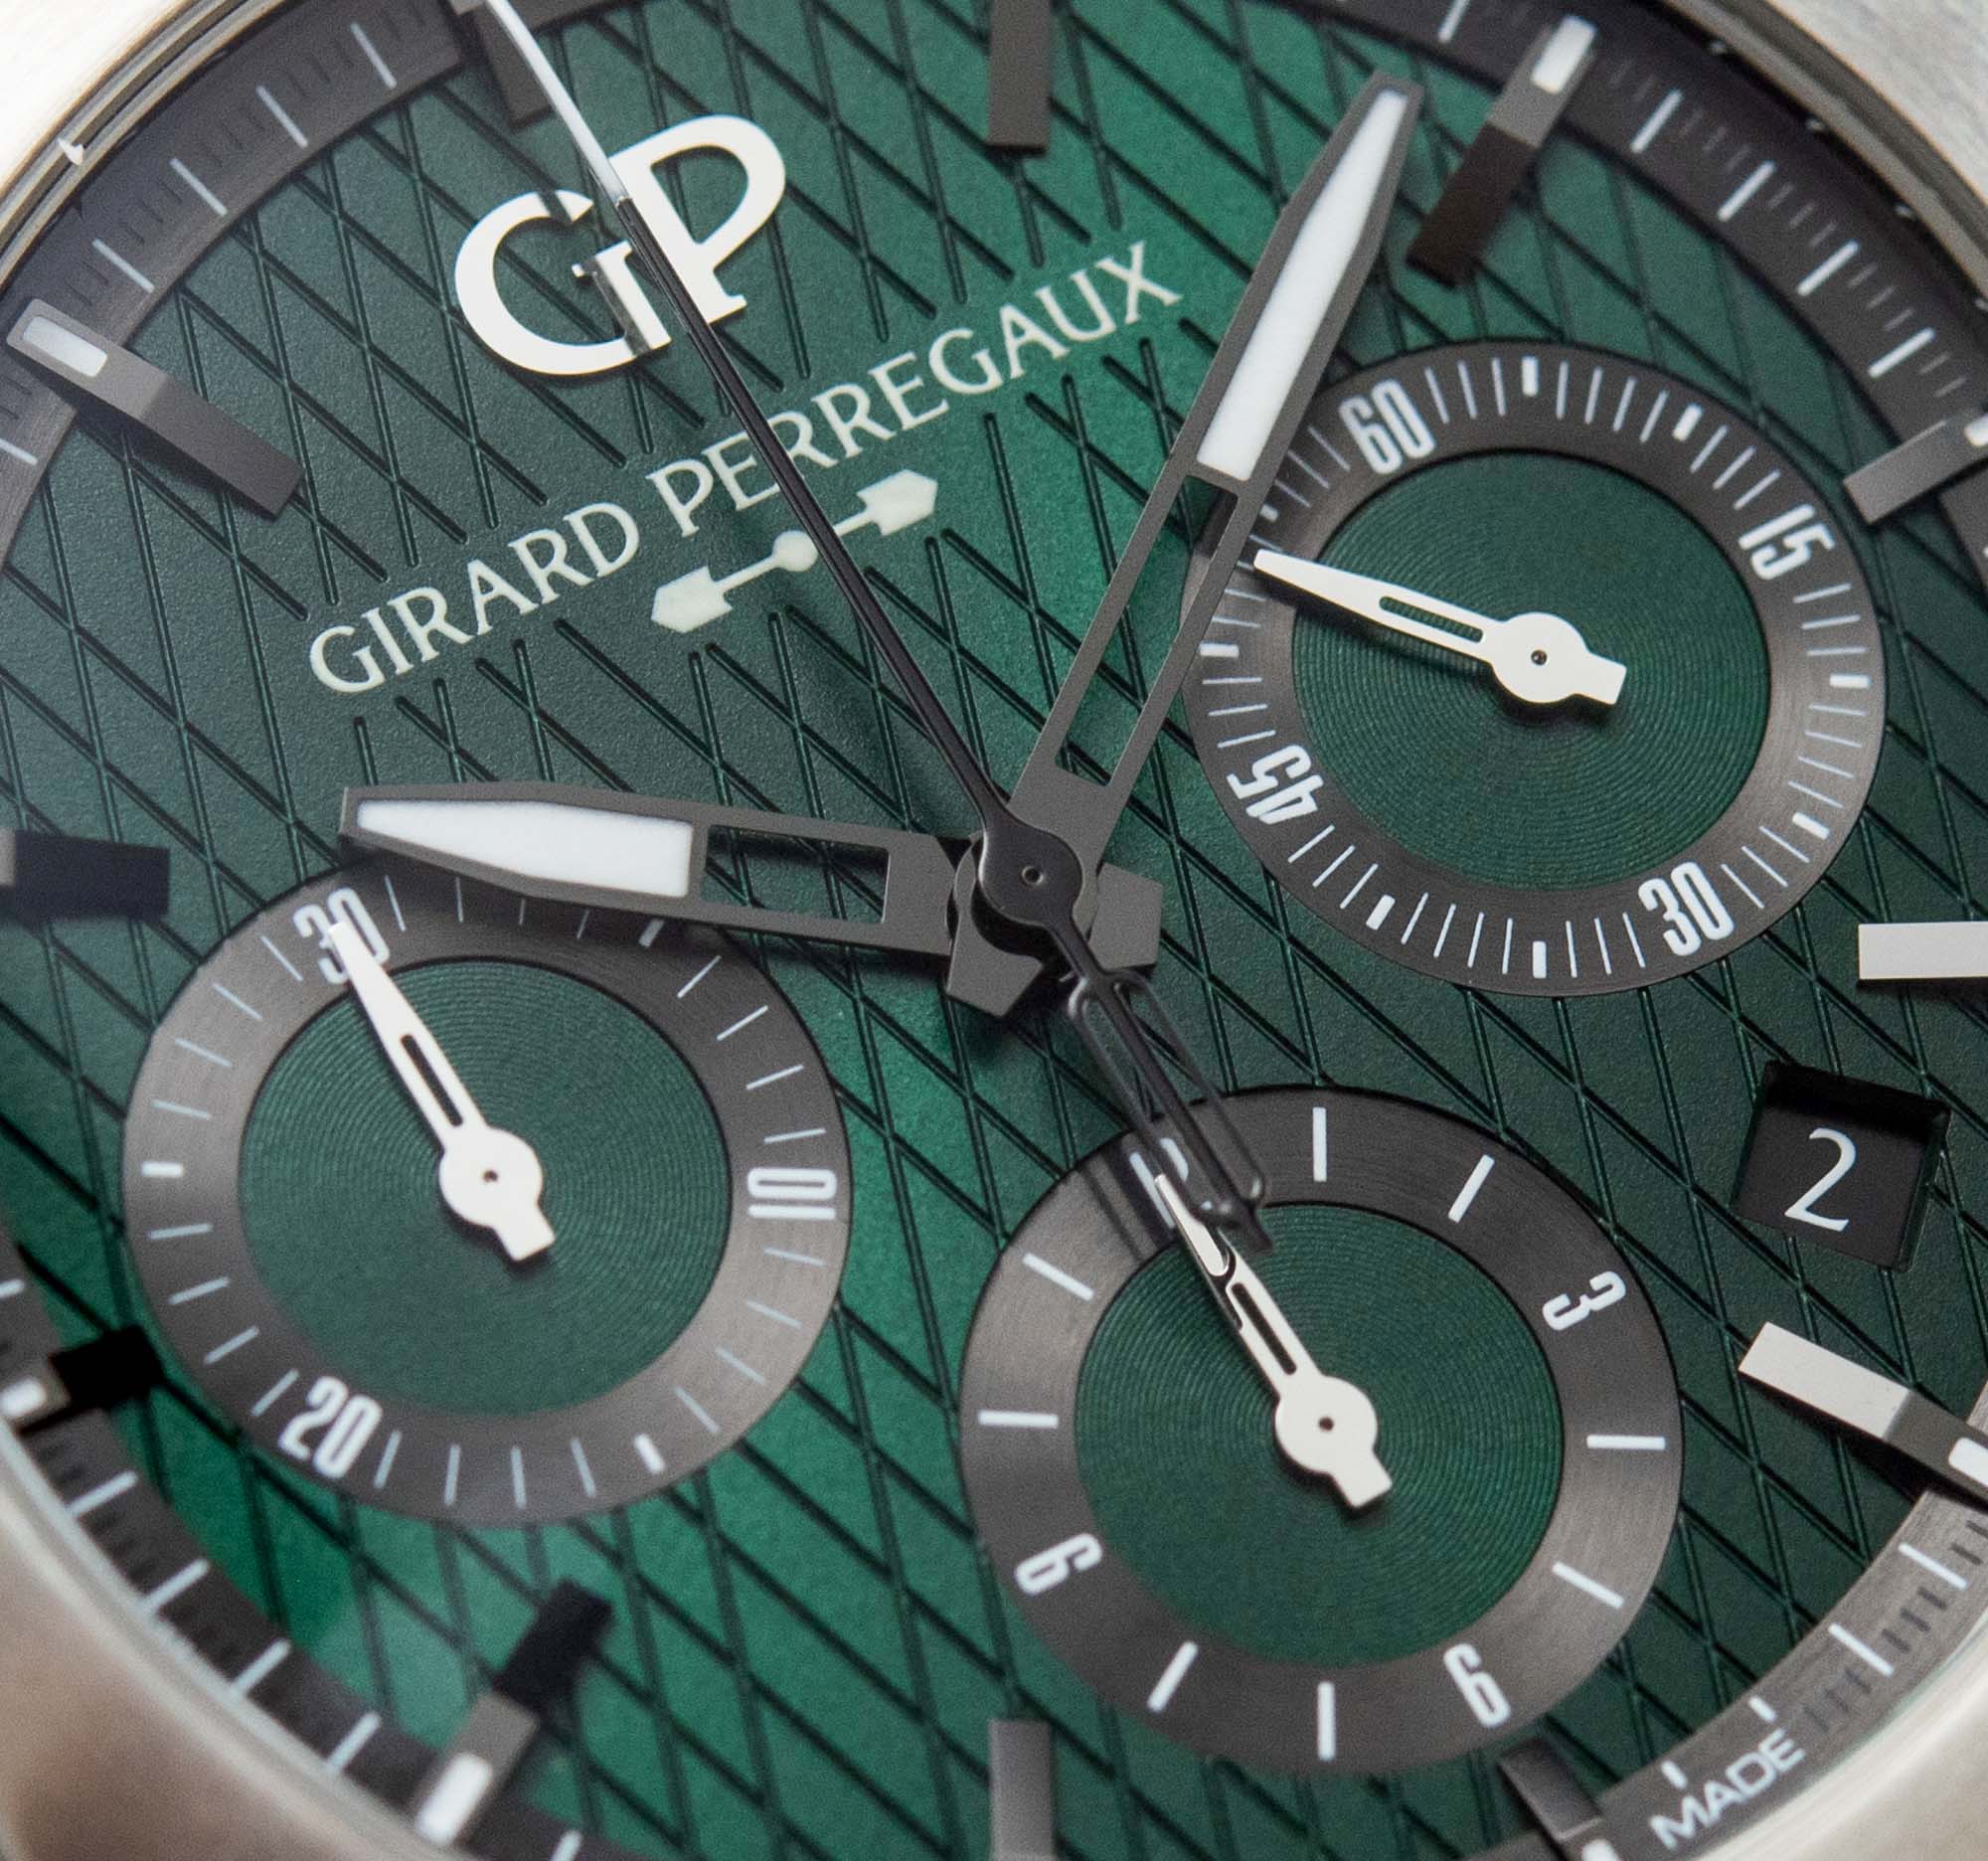 Girard-Perregaux Laureato Chronograph - часы серии Aston Martin